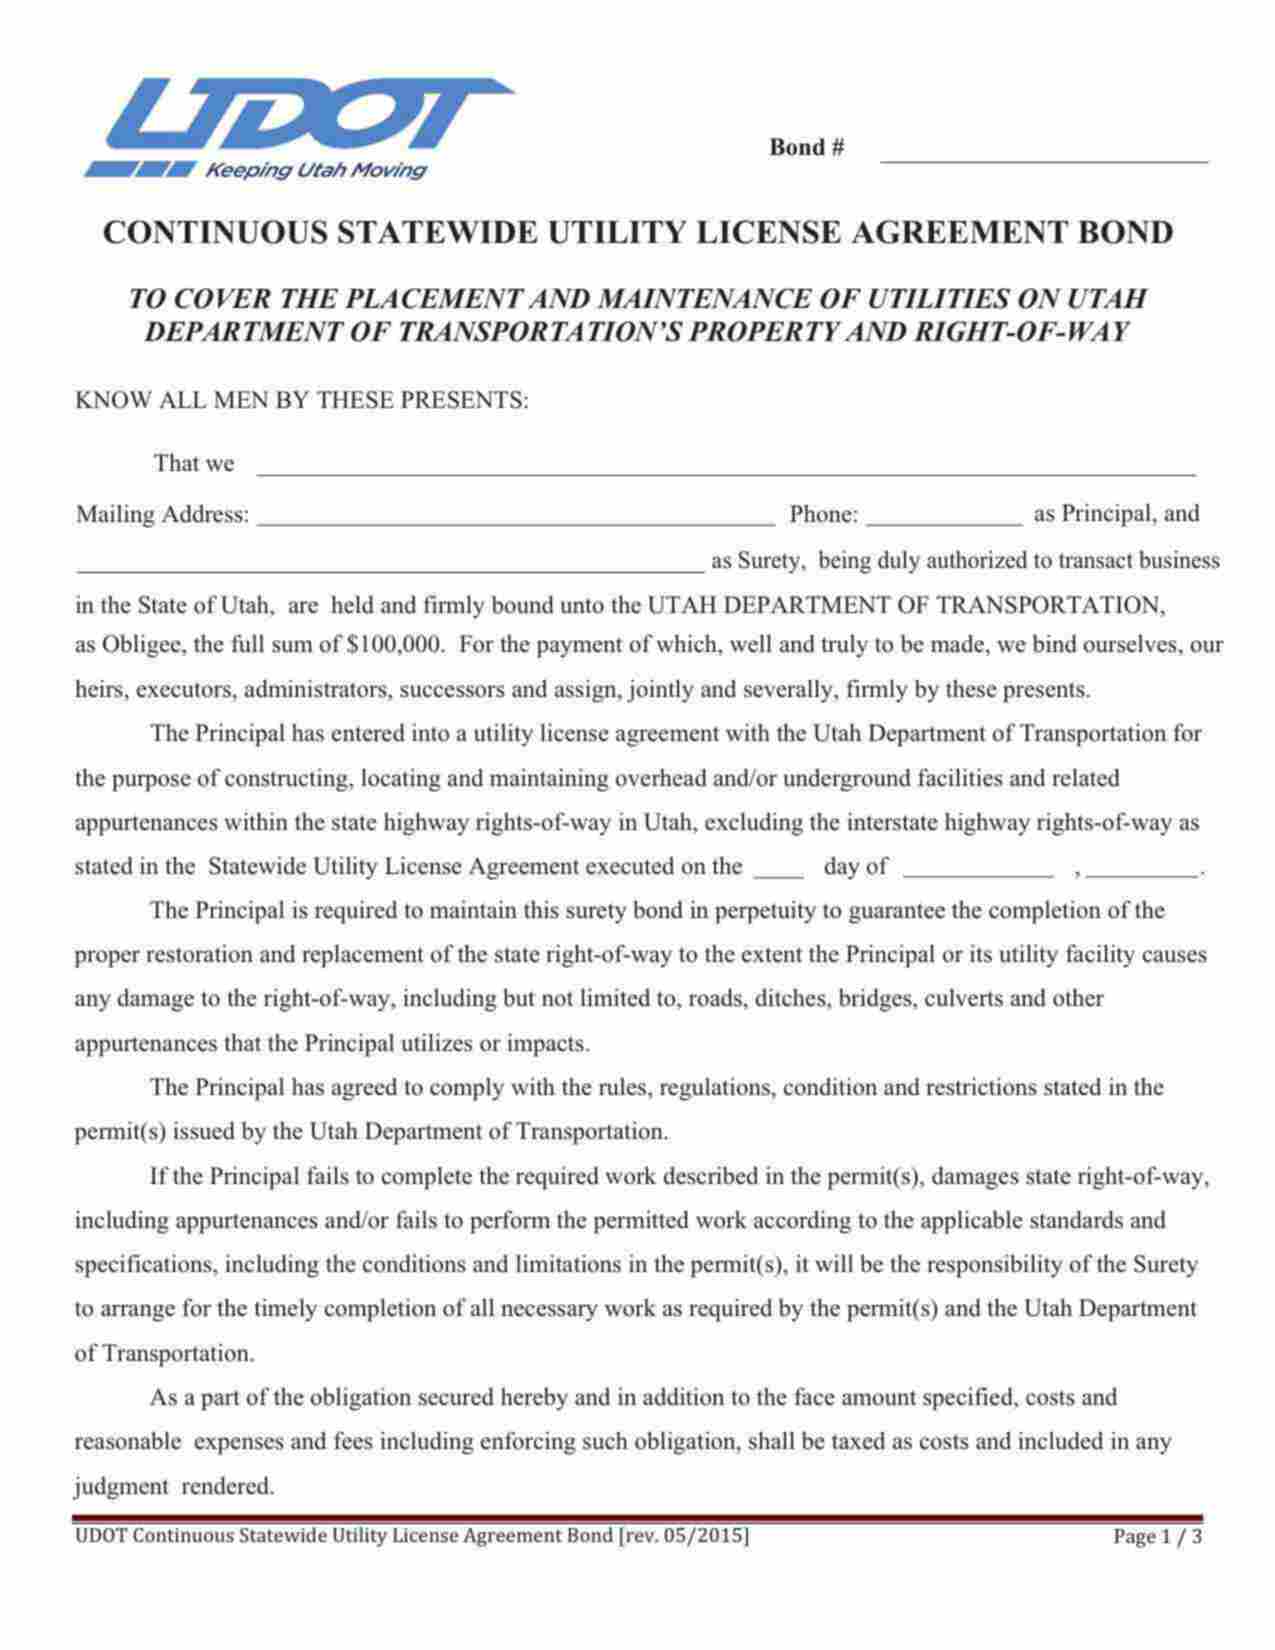 Utah Continous Statewide Utiltity License Agreement Bond Form